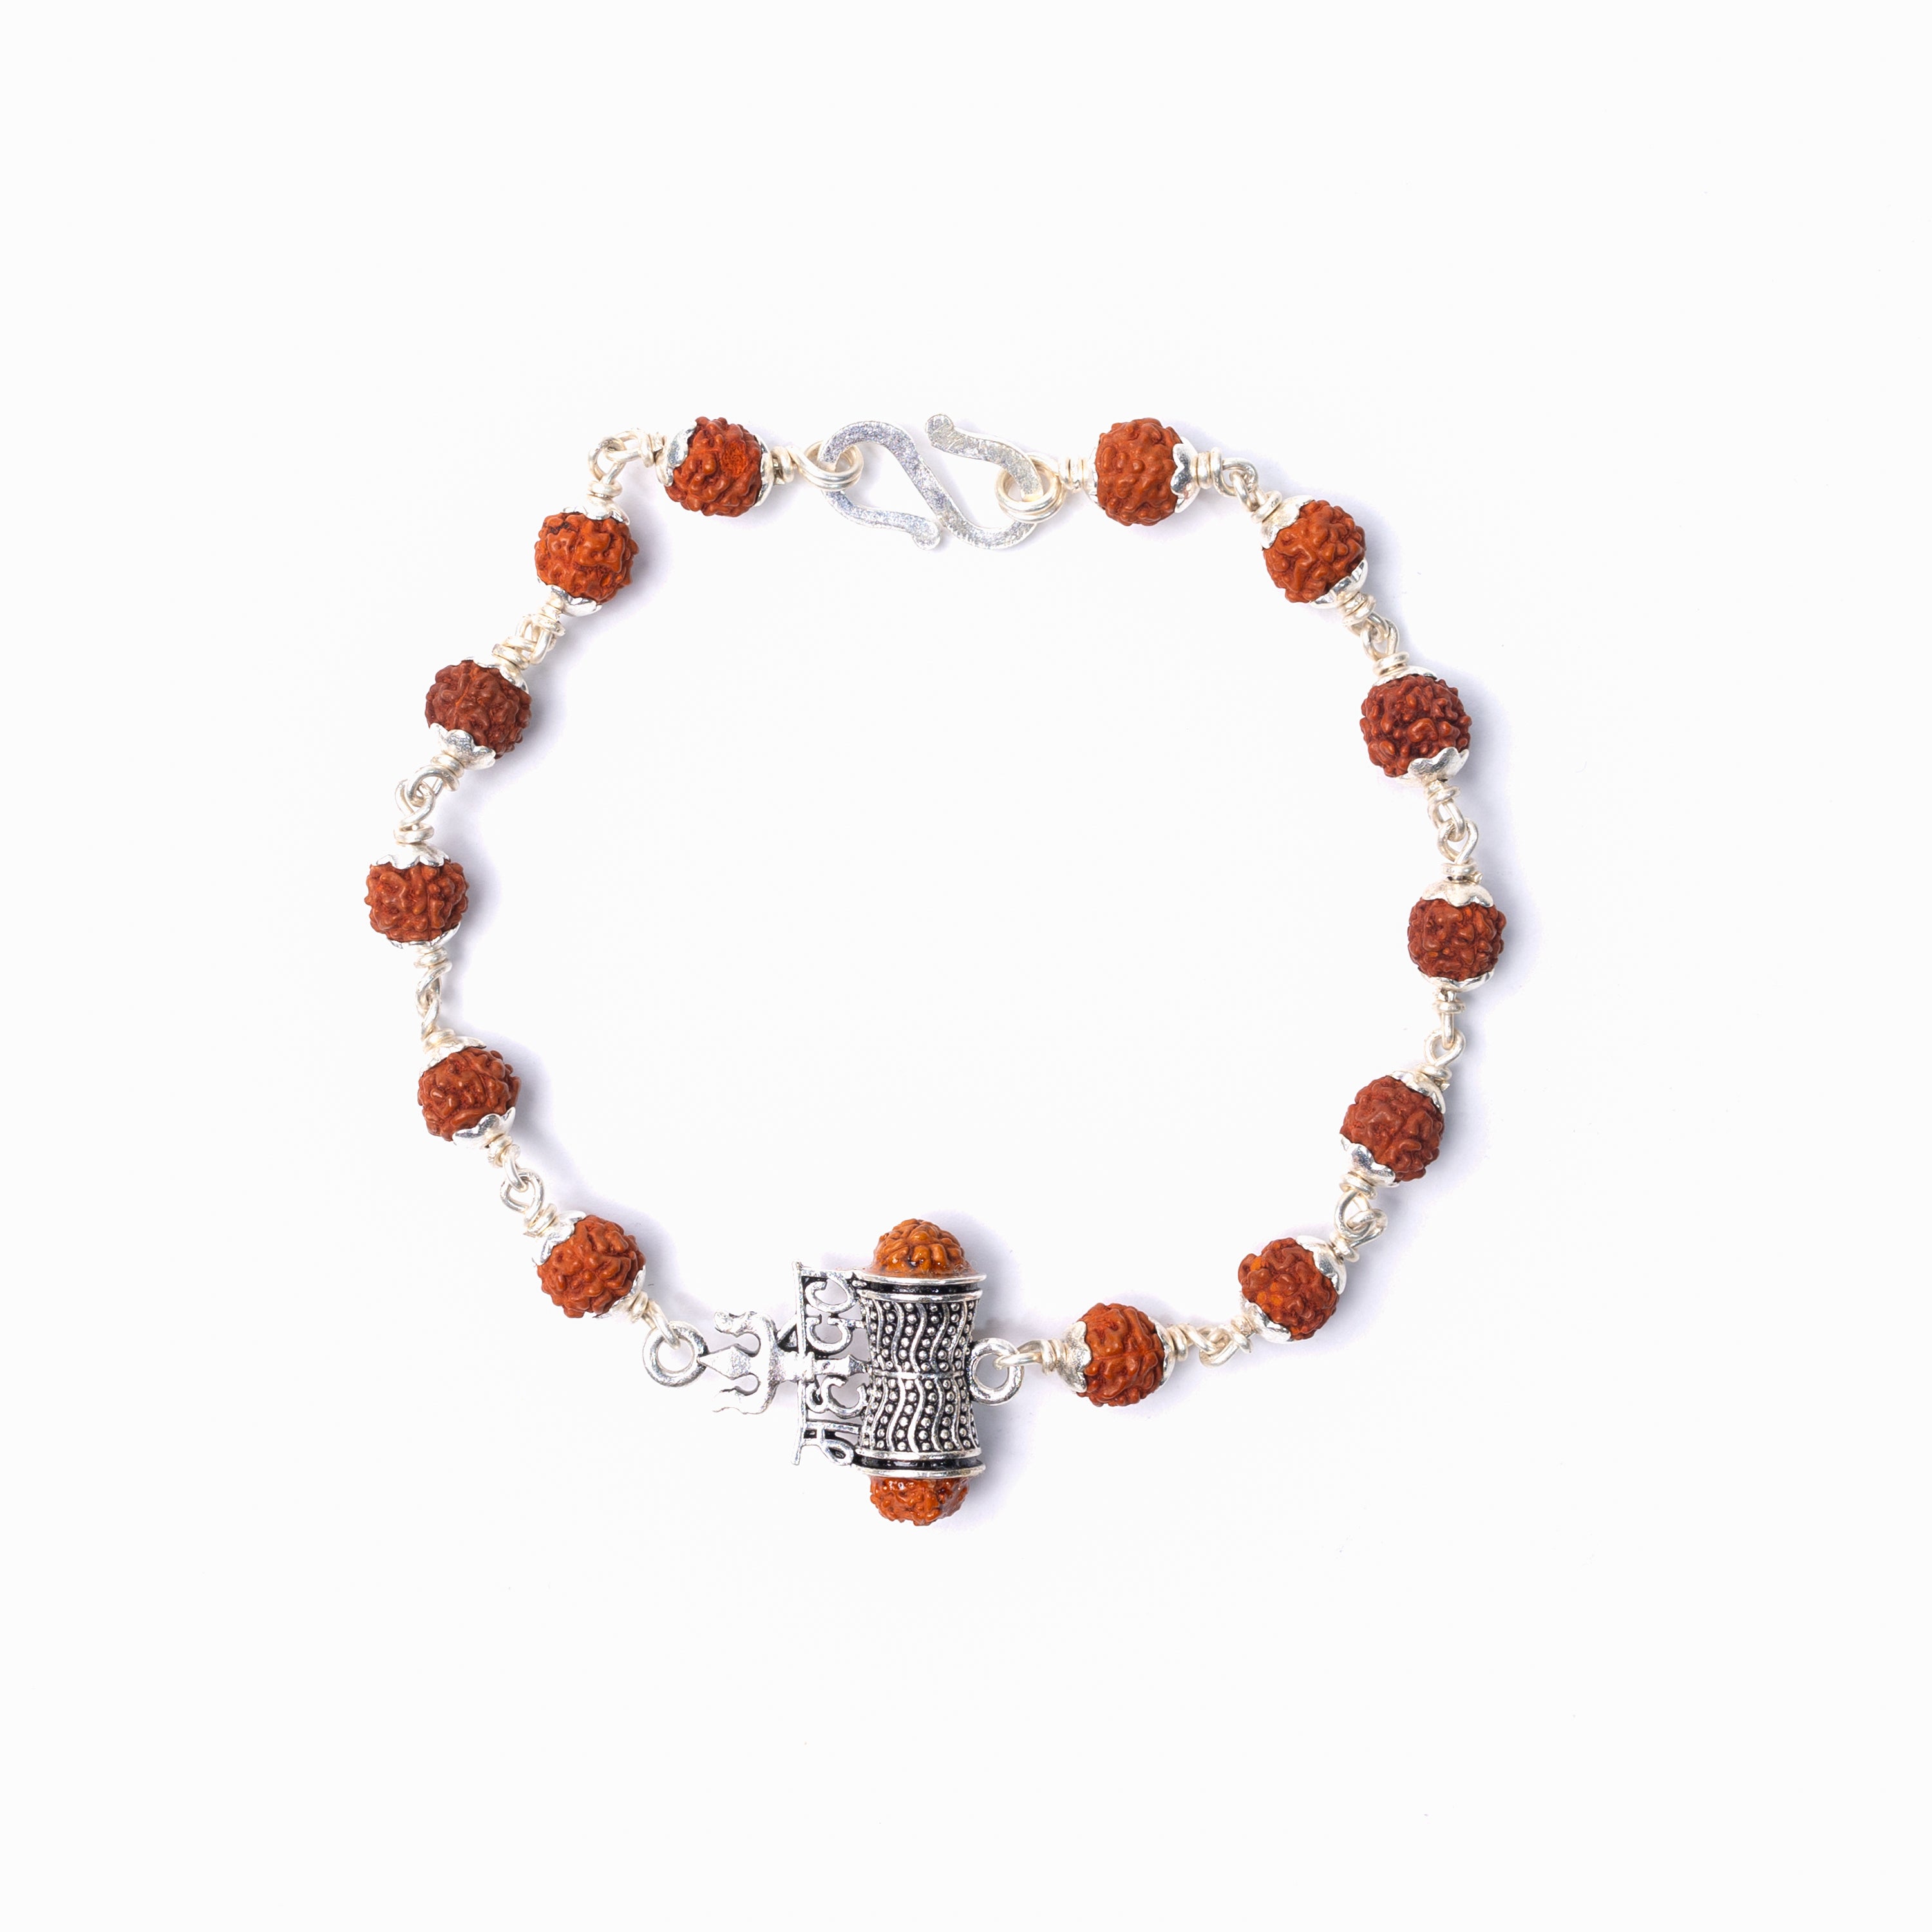 Mahadev Om Trishul Bracelet Spiritual Lord Shiva Fashion Stylish Wrist Band  Kada | eBay